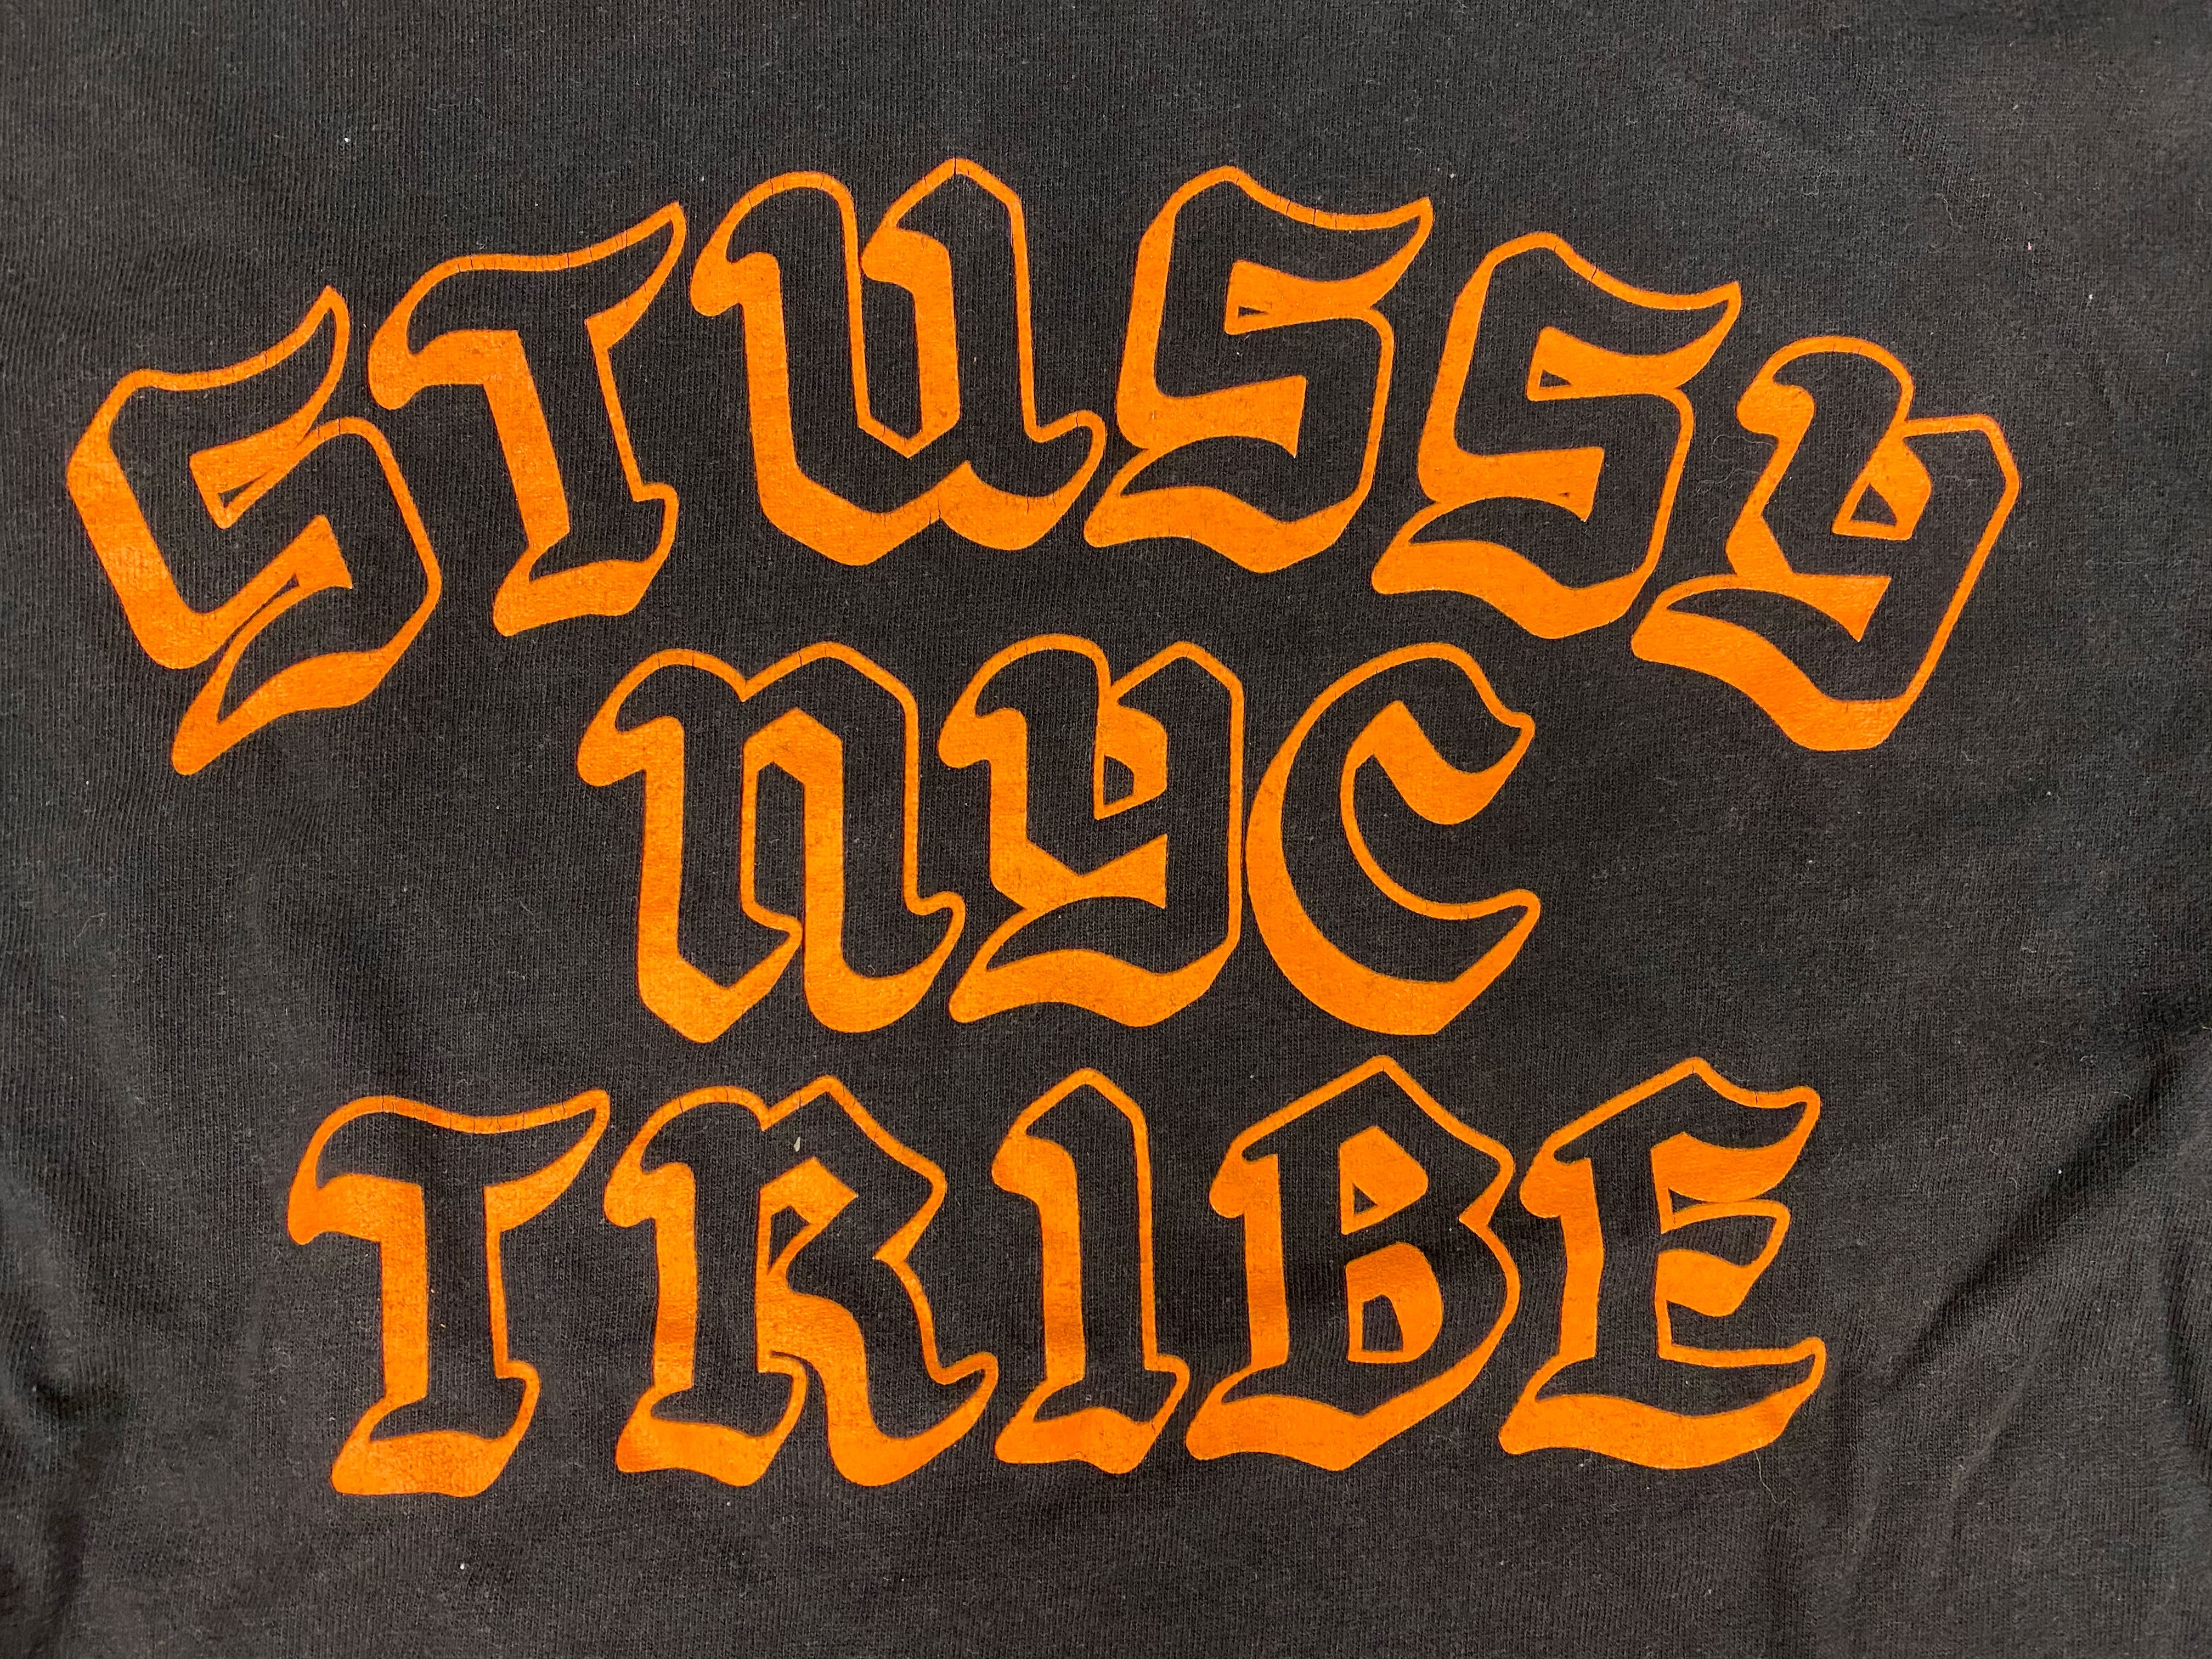 Stussy NYC Tribe Tee - Black